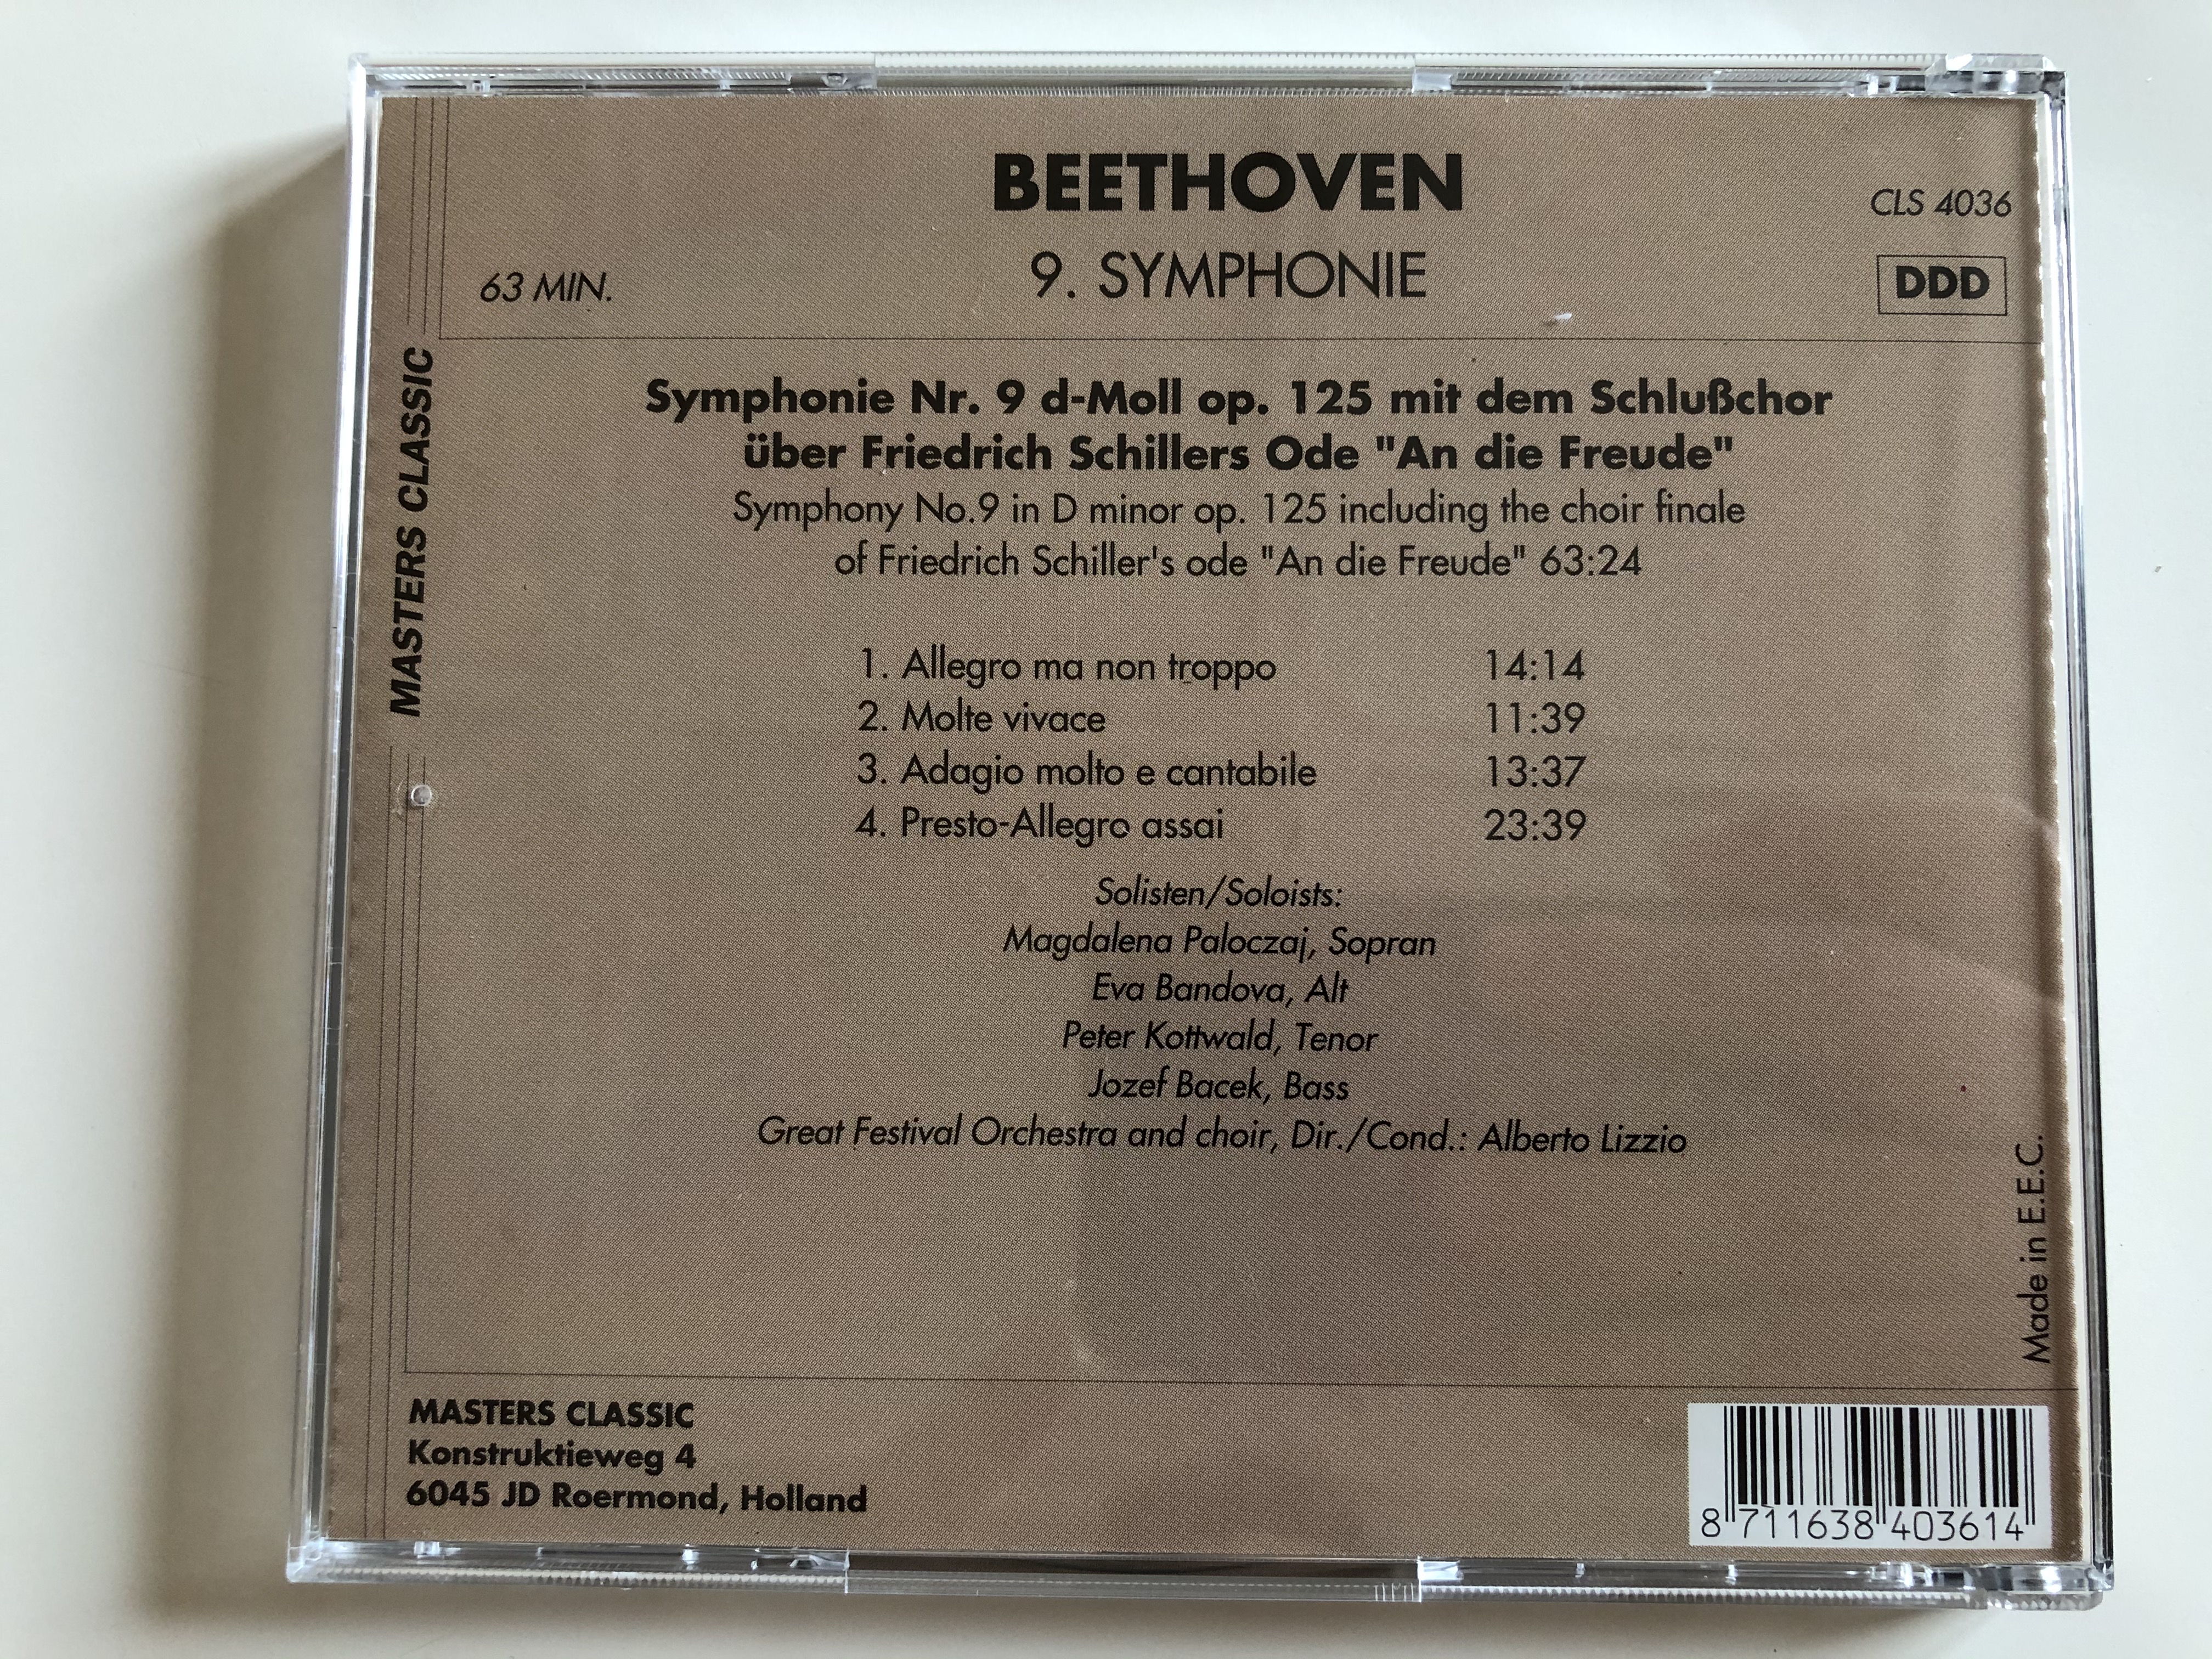 beethoven-9-sinfonie-op.-125-mit-schlu-chor-ber-friedrich-schillers-ode-an-die-freude-symphony-no.-9-op.-125-in-d-minor-great-festival-orchestra-great-festival-choir-alberto-lizzio-master-4-.jpg